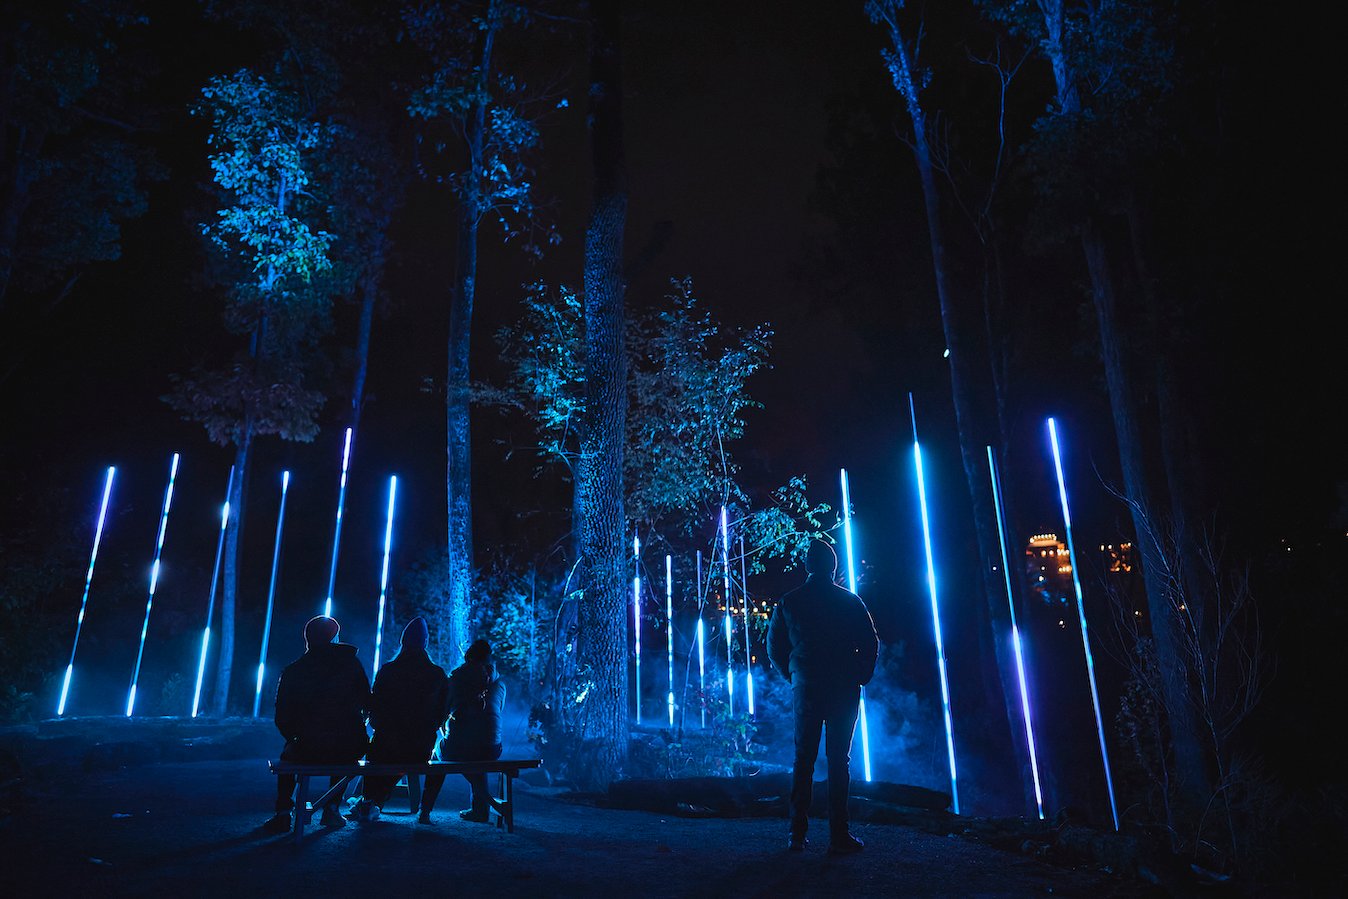 Multimedia Studio Moment Factory Brings The Lumina Night Walk Series To The U.S. | Live Design